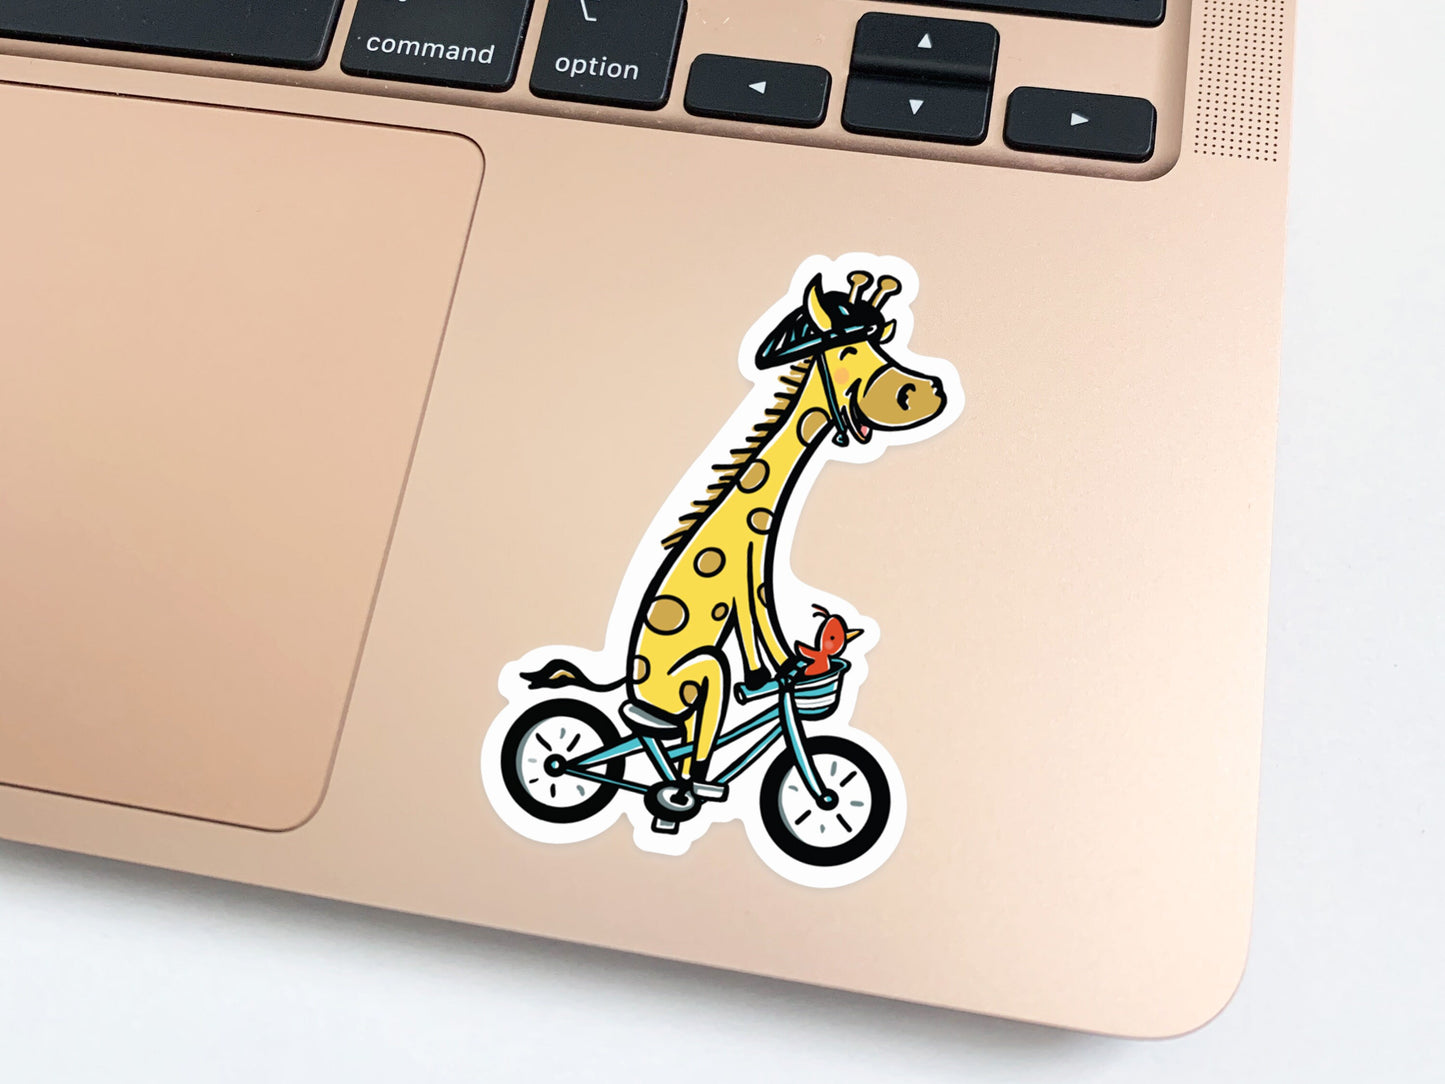 Giraffe Riding a Bike Vinyl Sticker